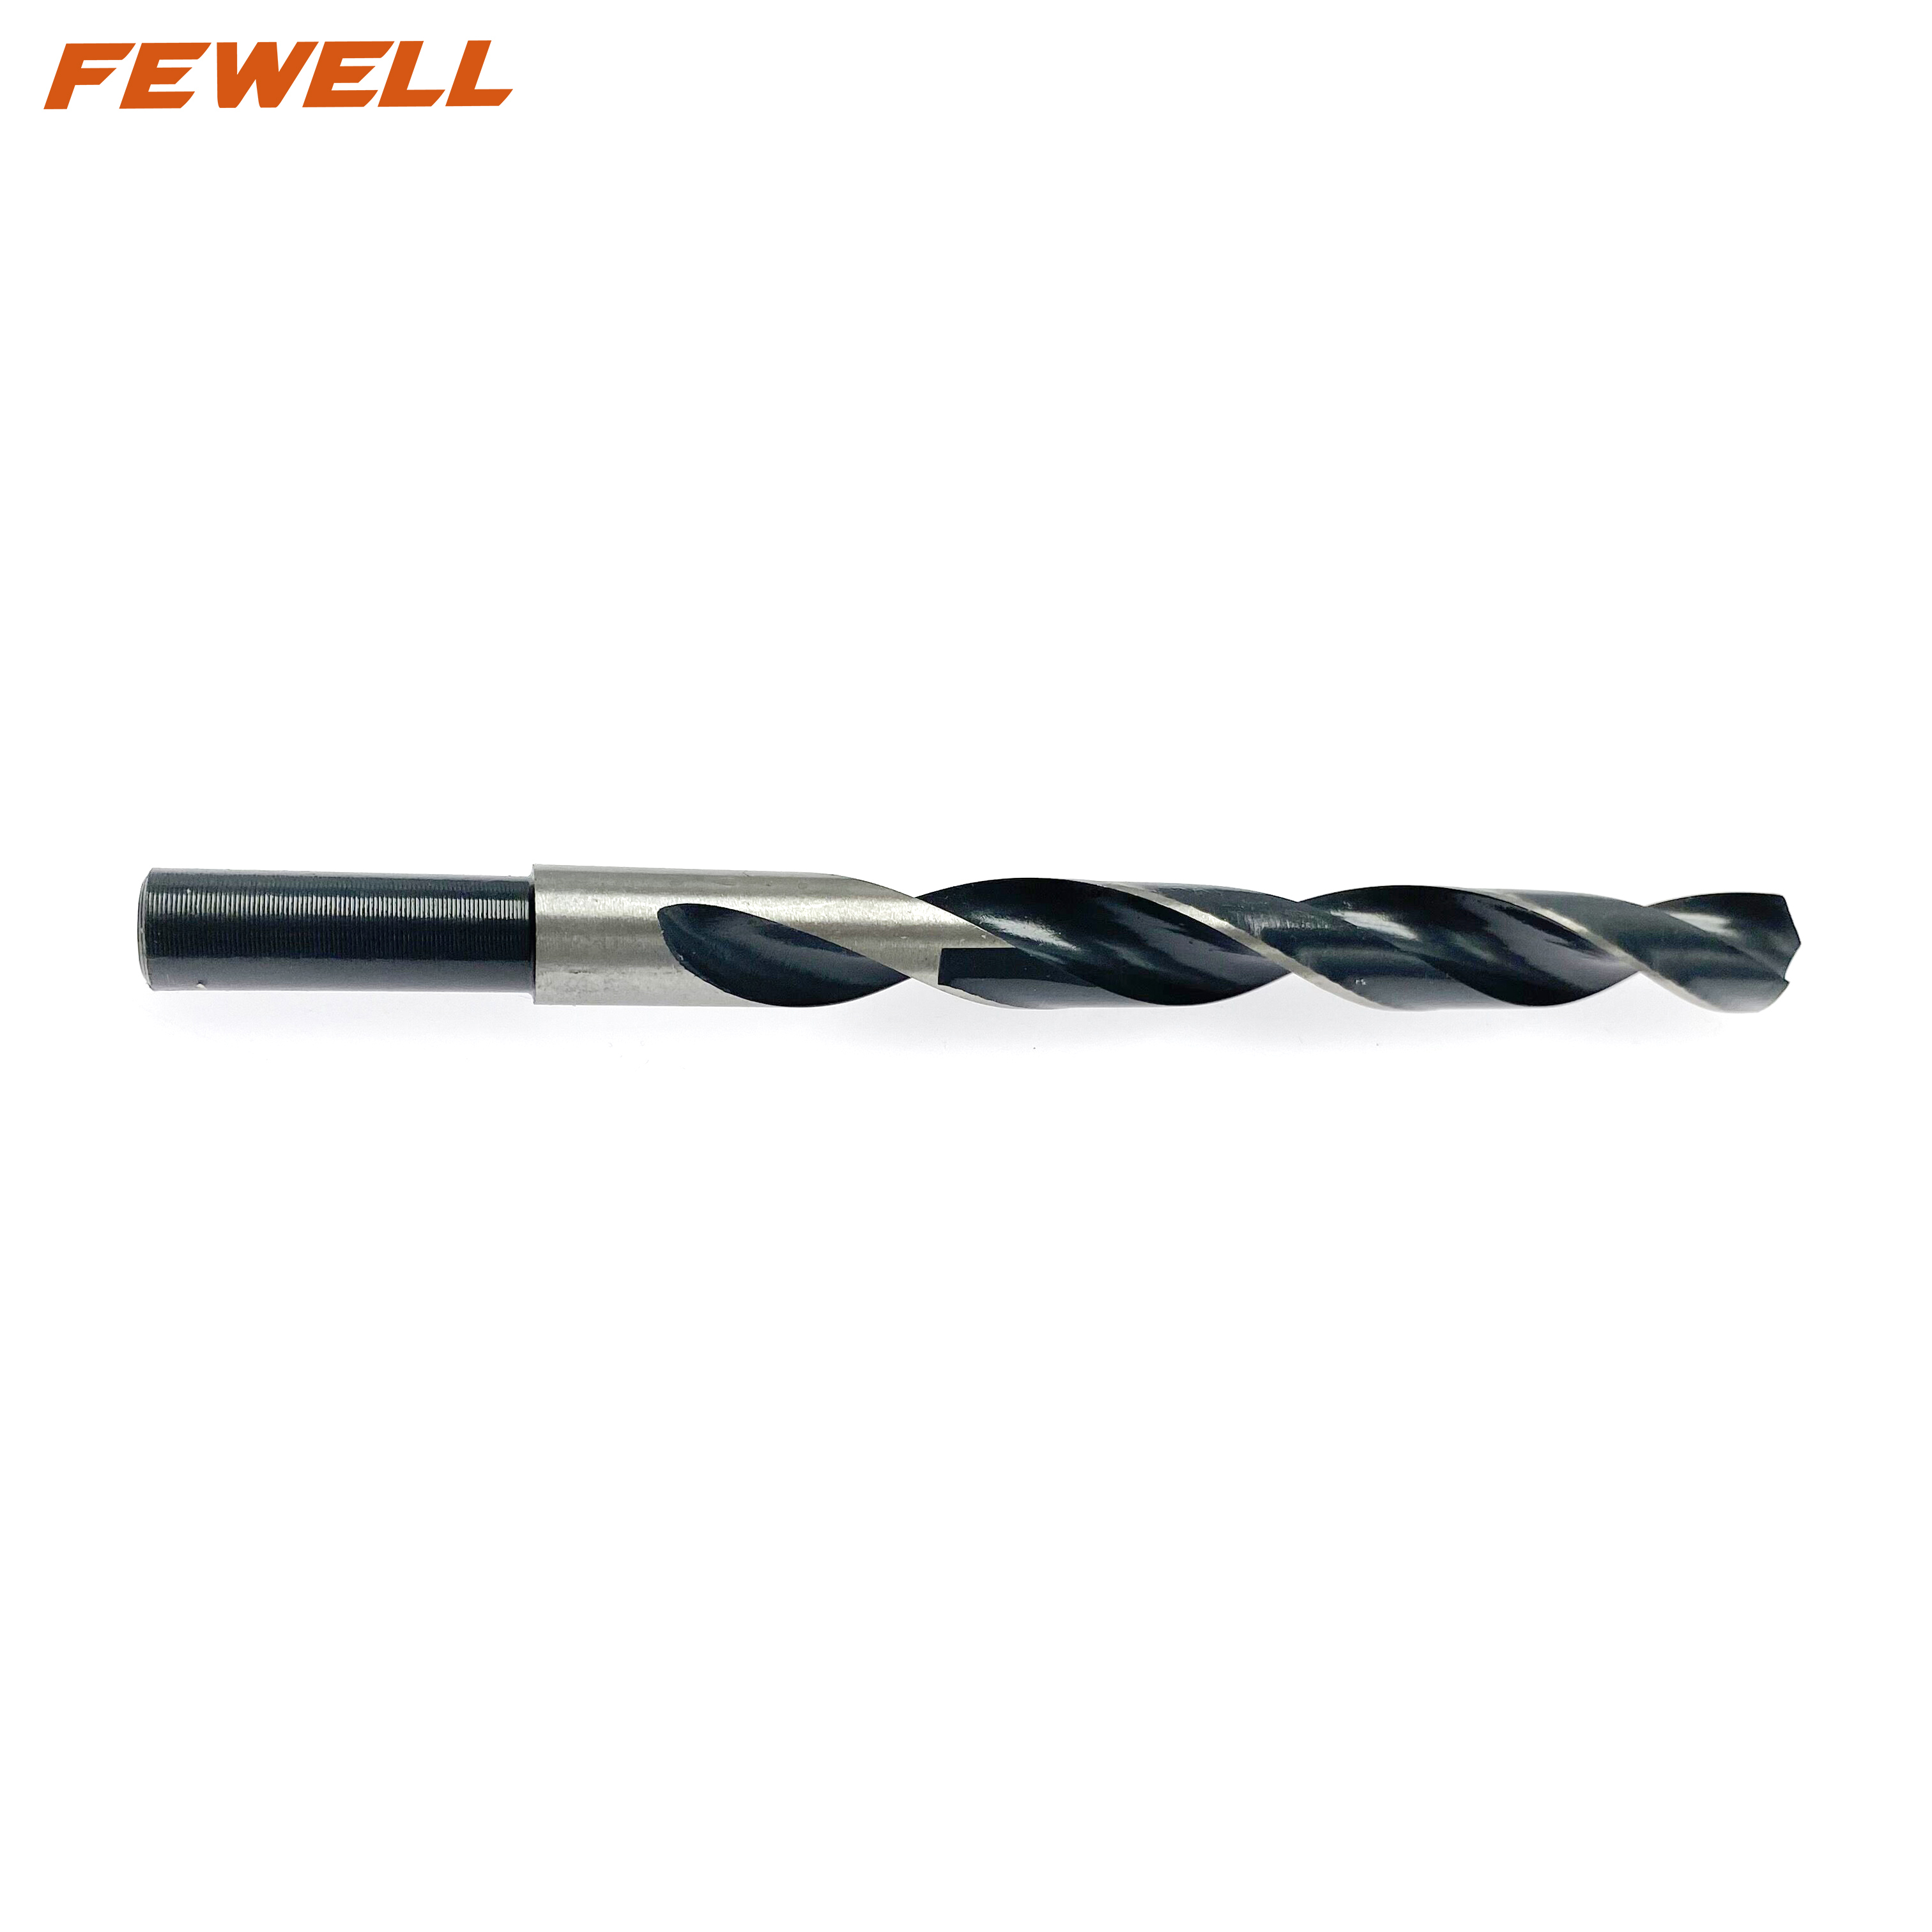 High quality 4241 HSS reduced shank twist drill bit 12/14/16/18/20/22 mm for metal drilling